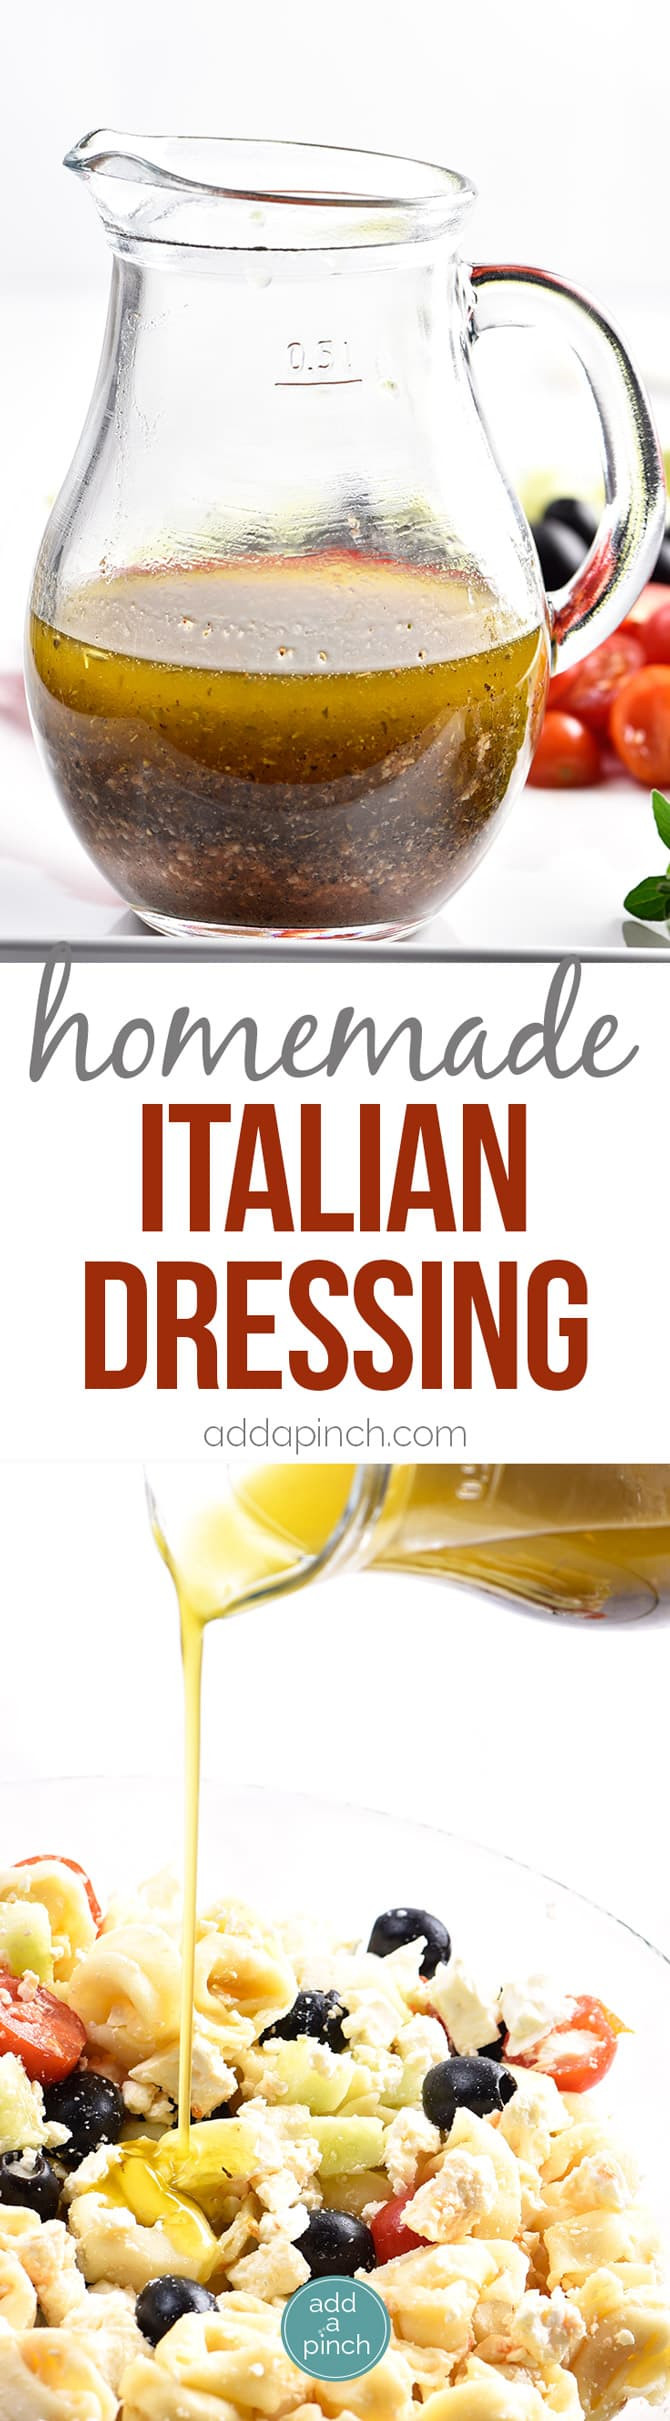 Italian Dressing Recipes
 Easy Homemade Italian Dressing Recipe Add a Pinch